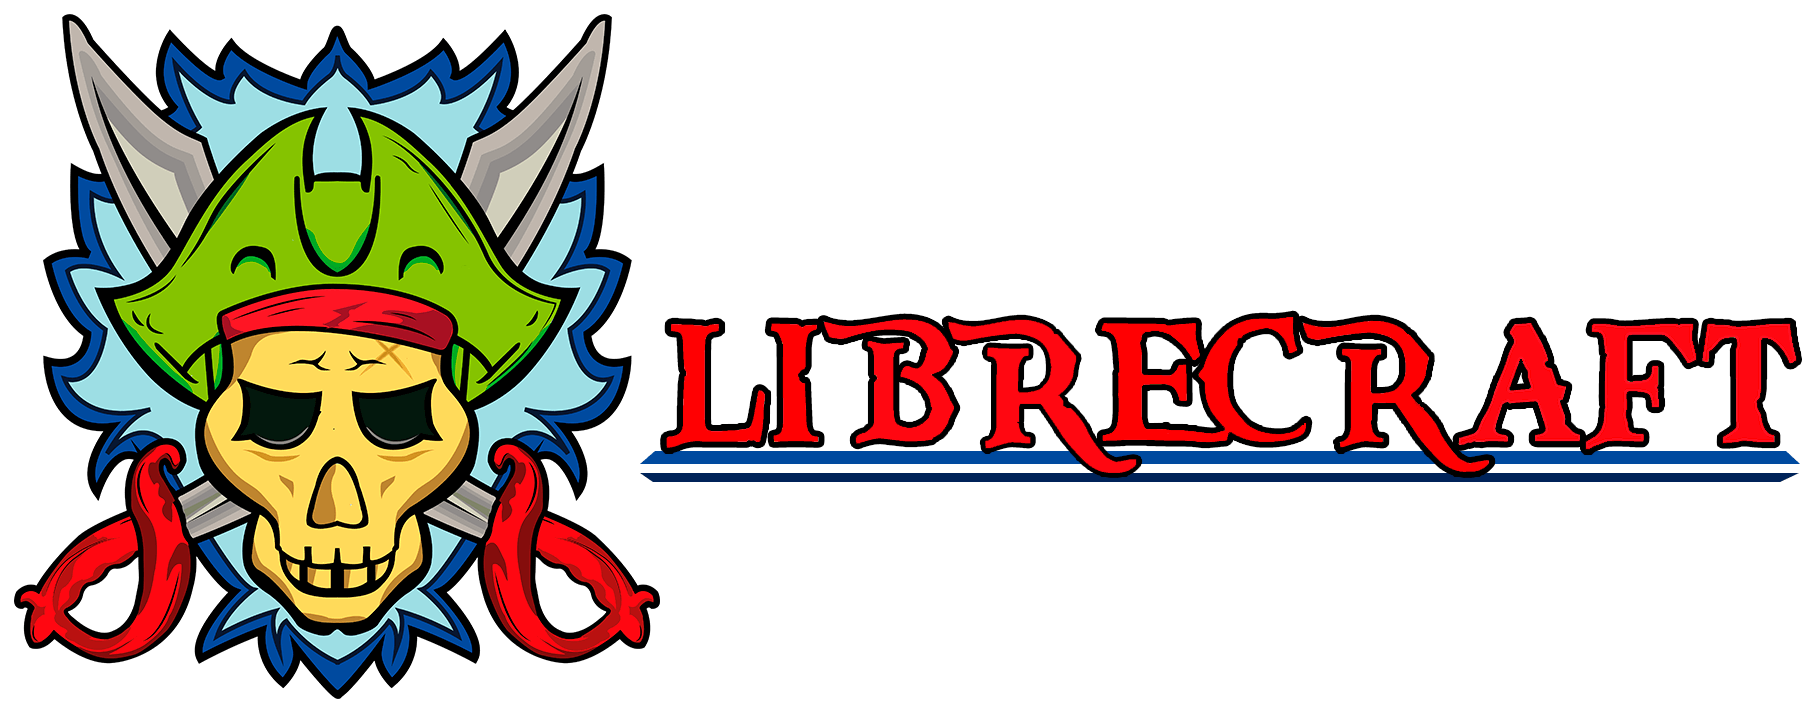 Librecraft horizontal logo